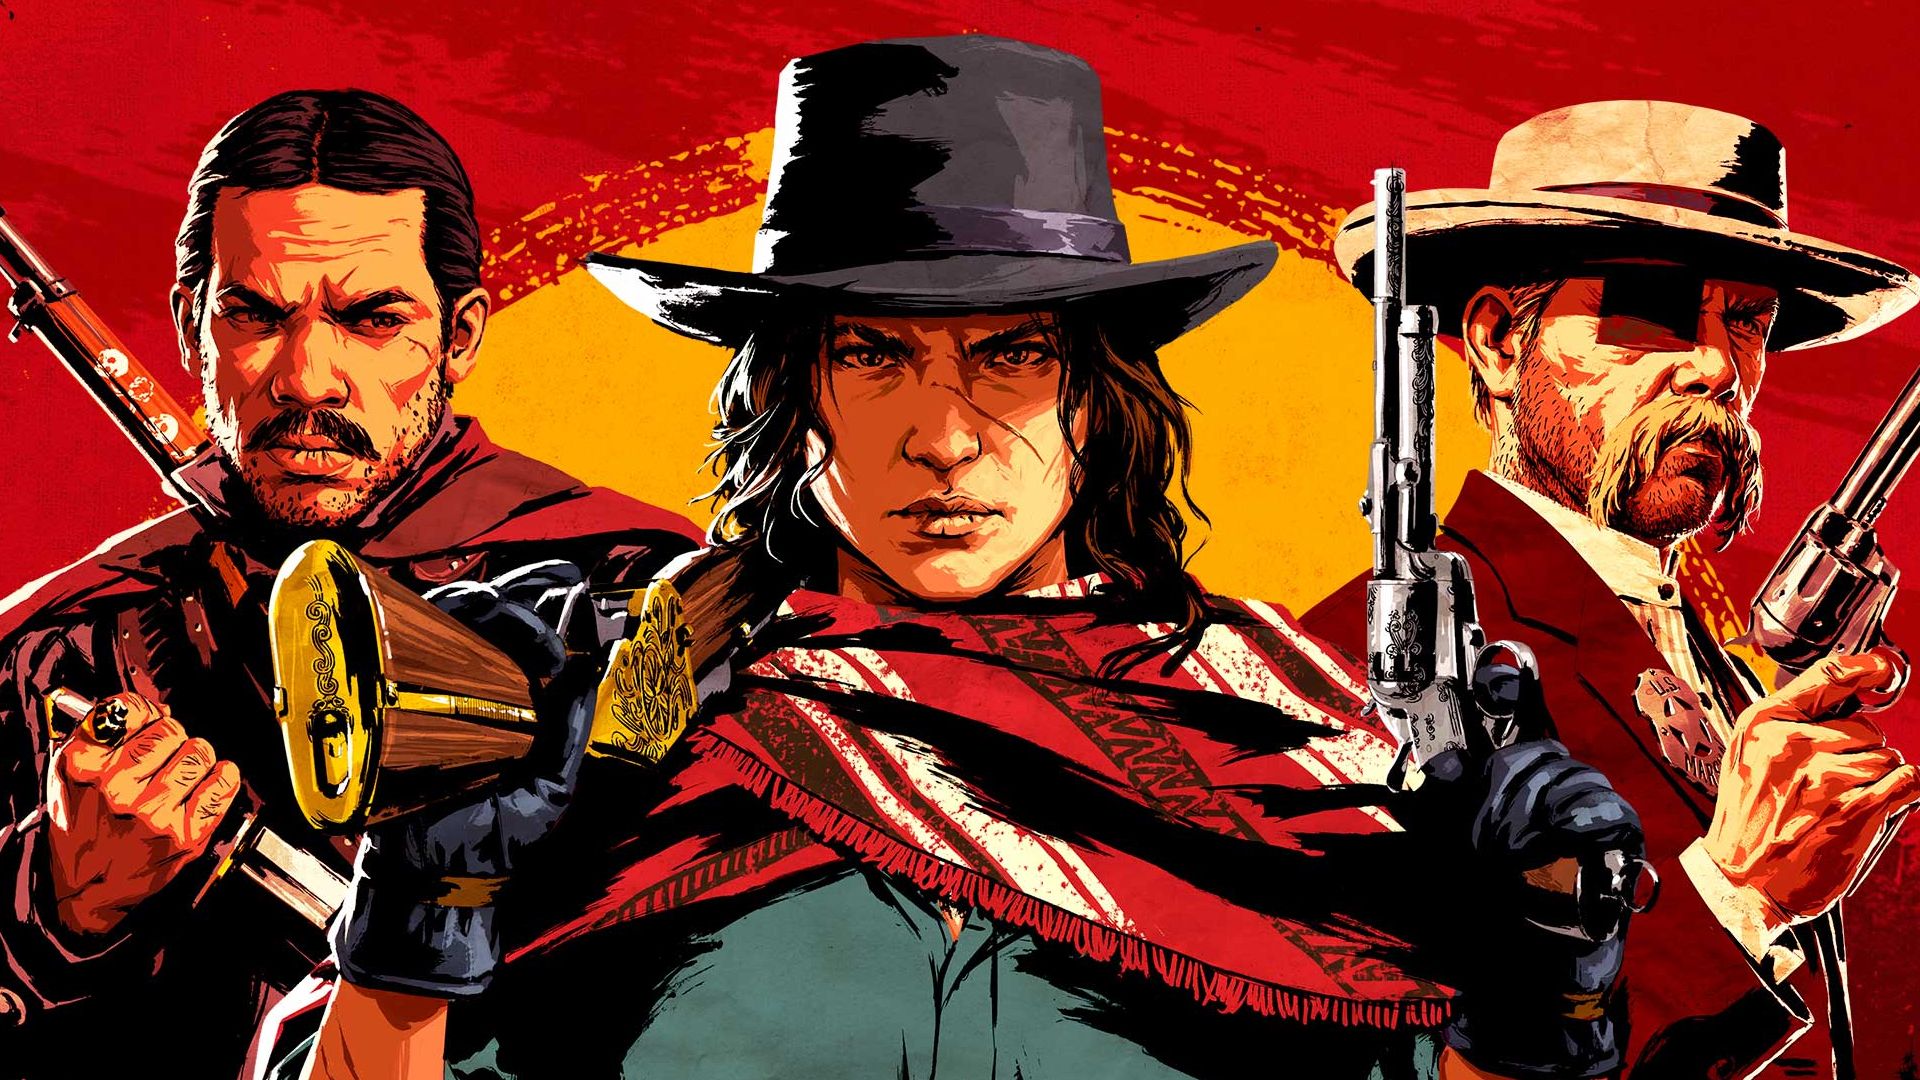 Red Dead Redemption 2 Review - The Wild, Wild West Part 2